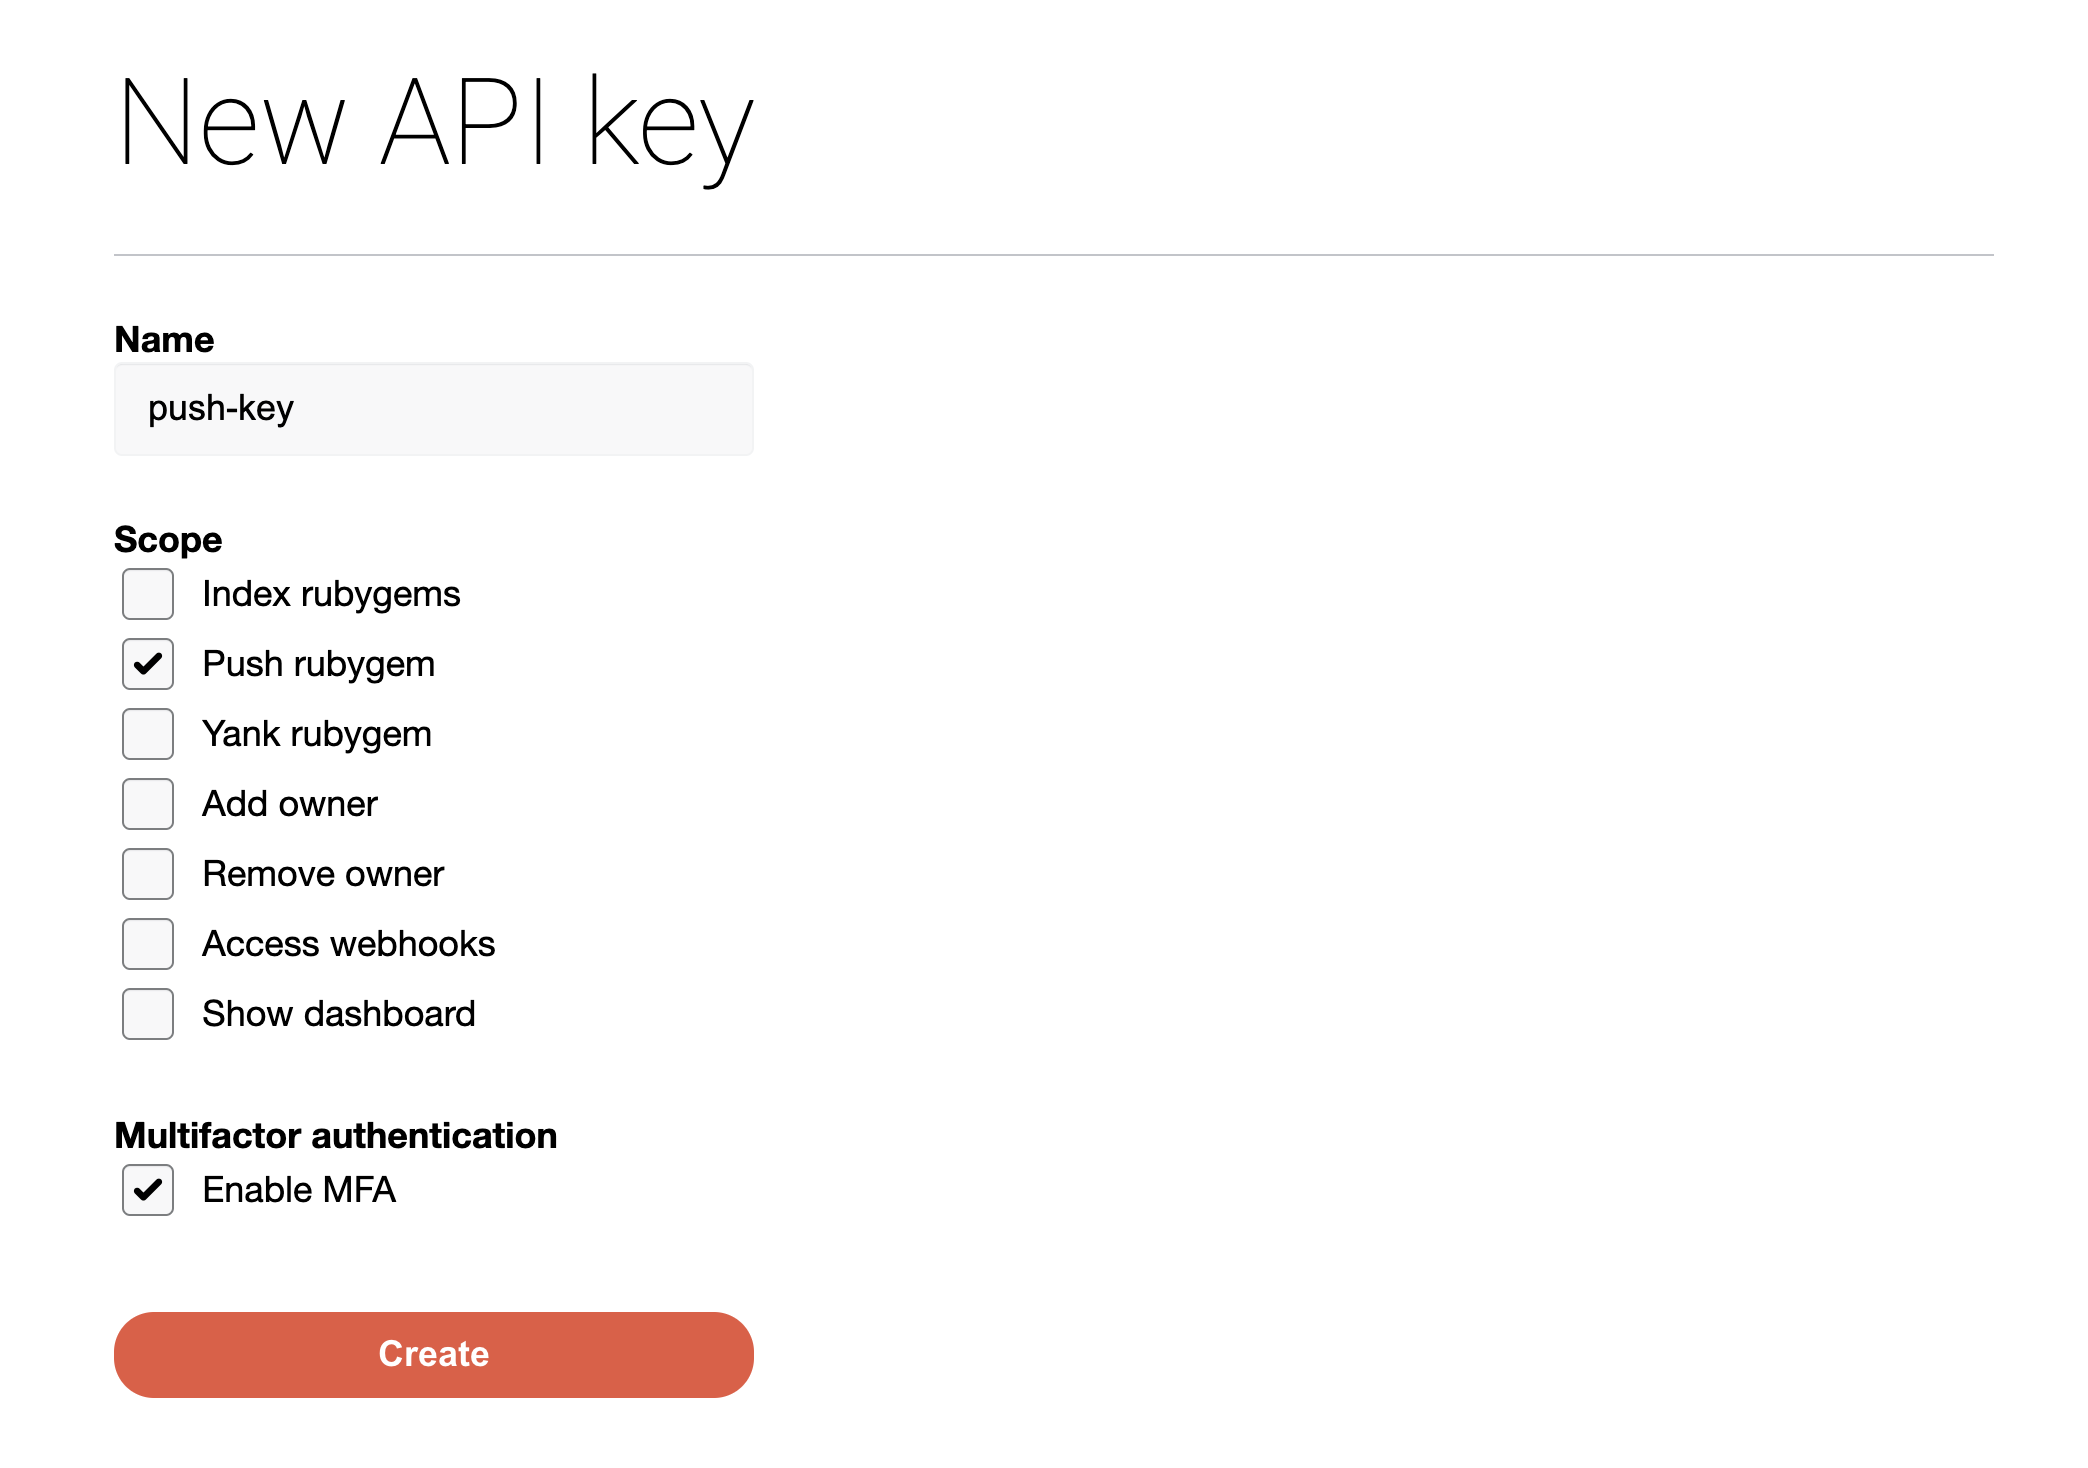 New API key with MFA enabled